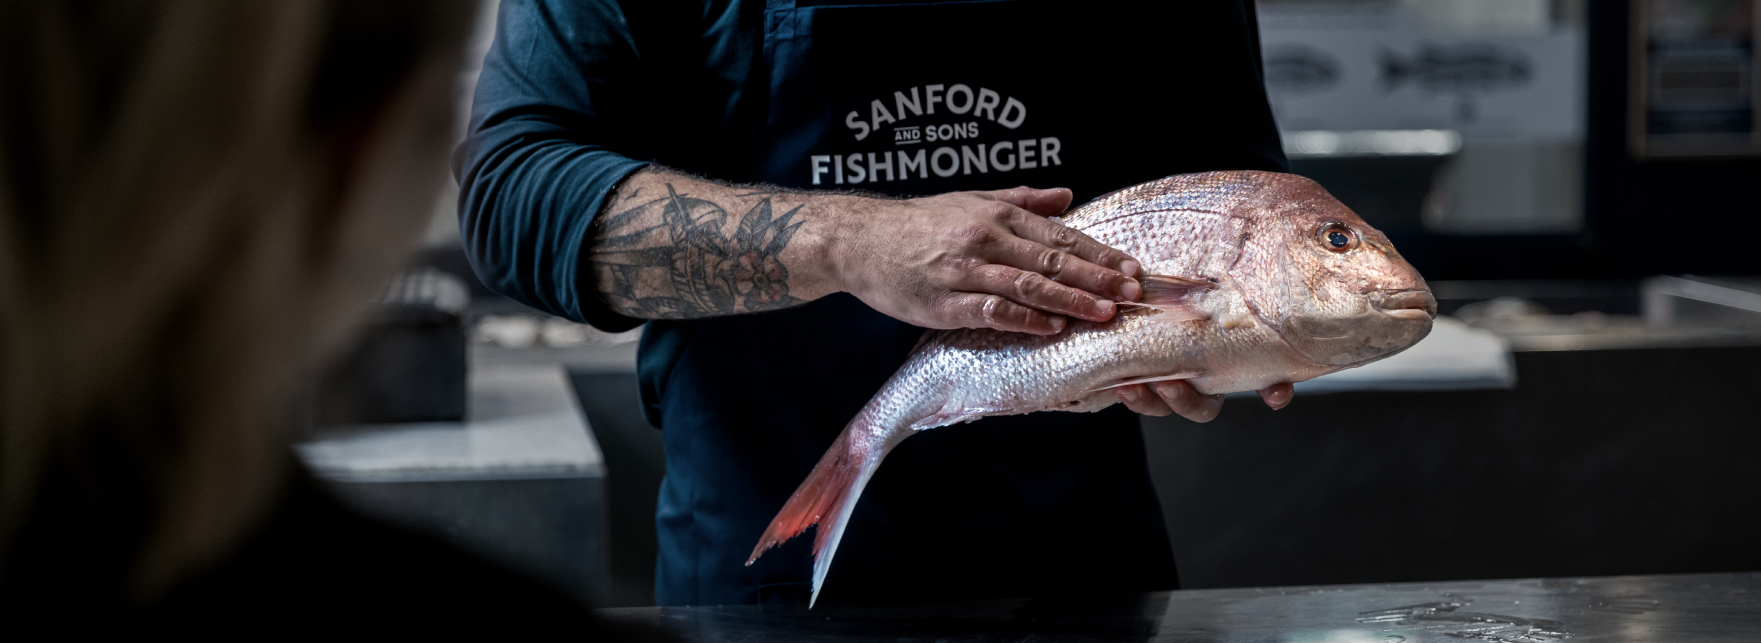 Our Heritage - Sanford Fishmonger